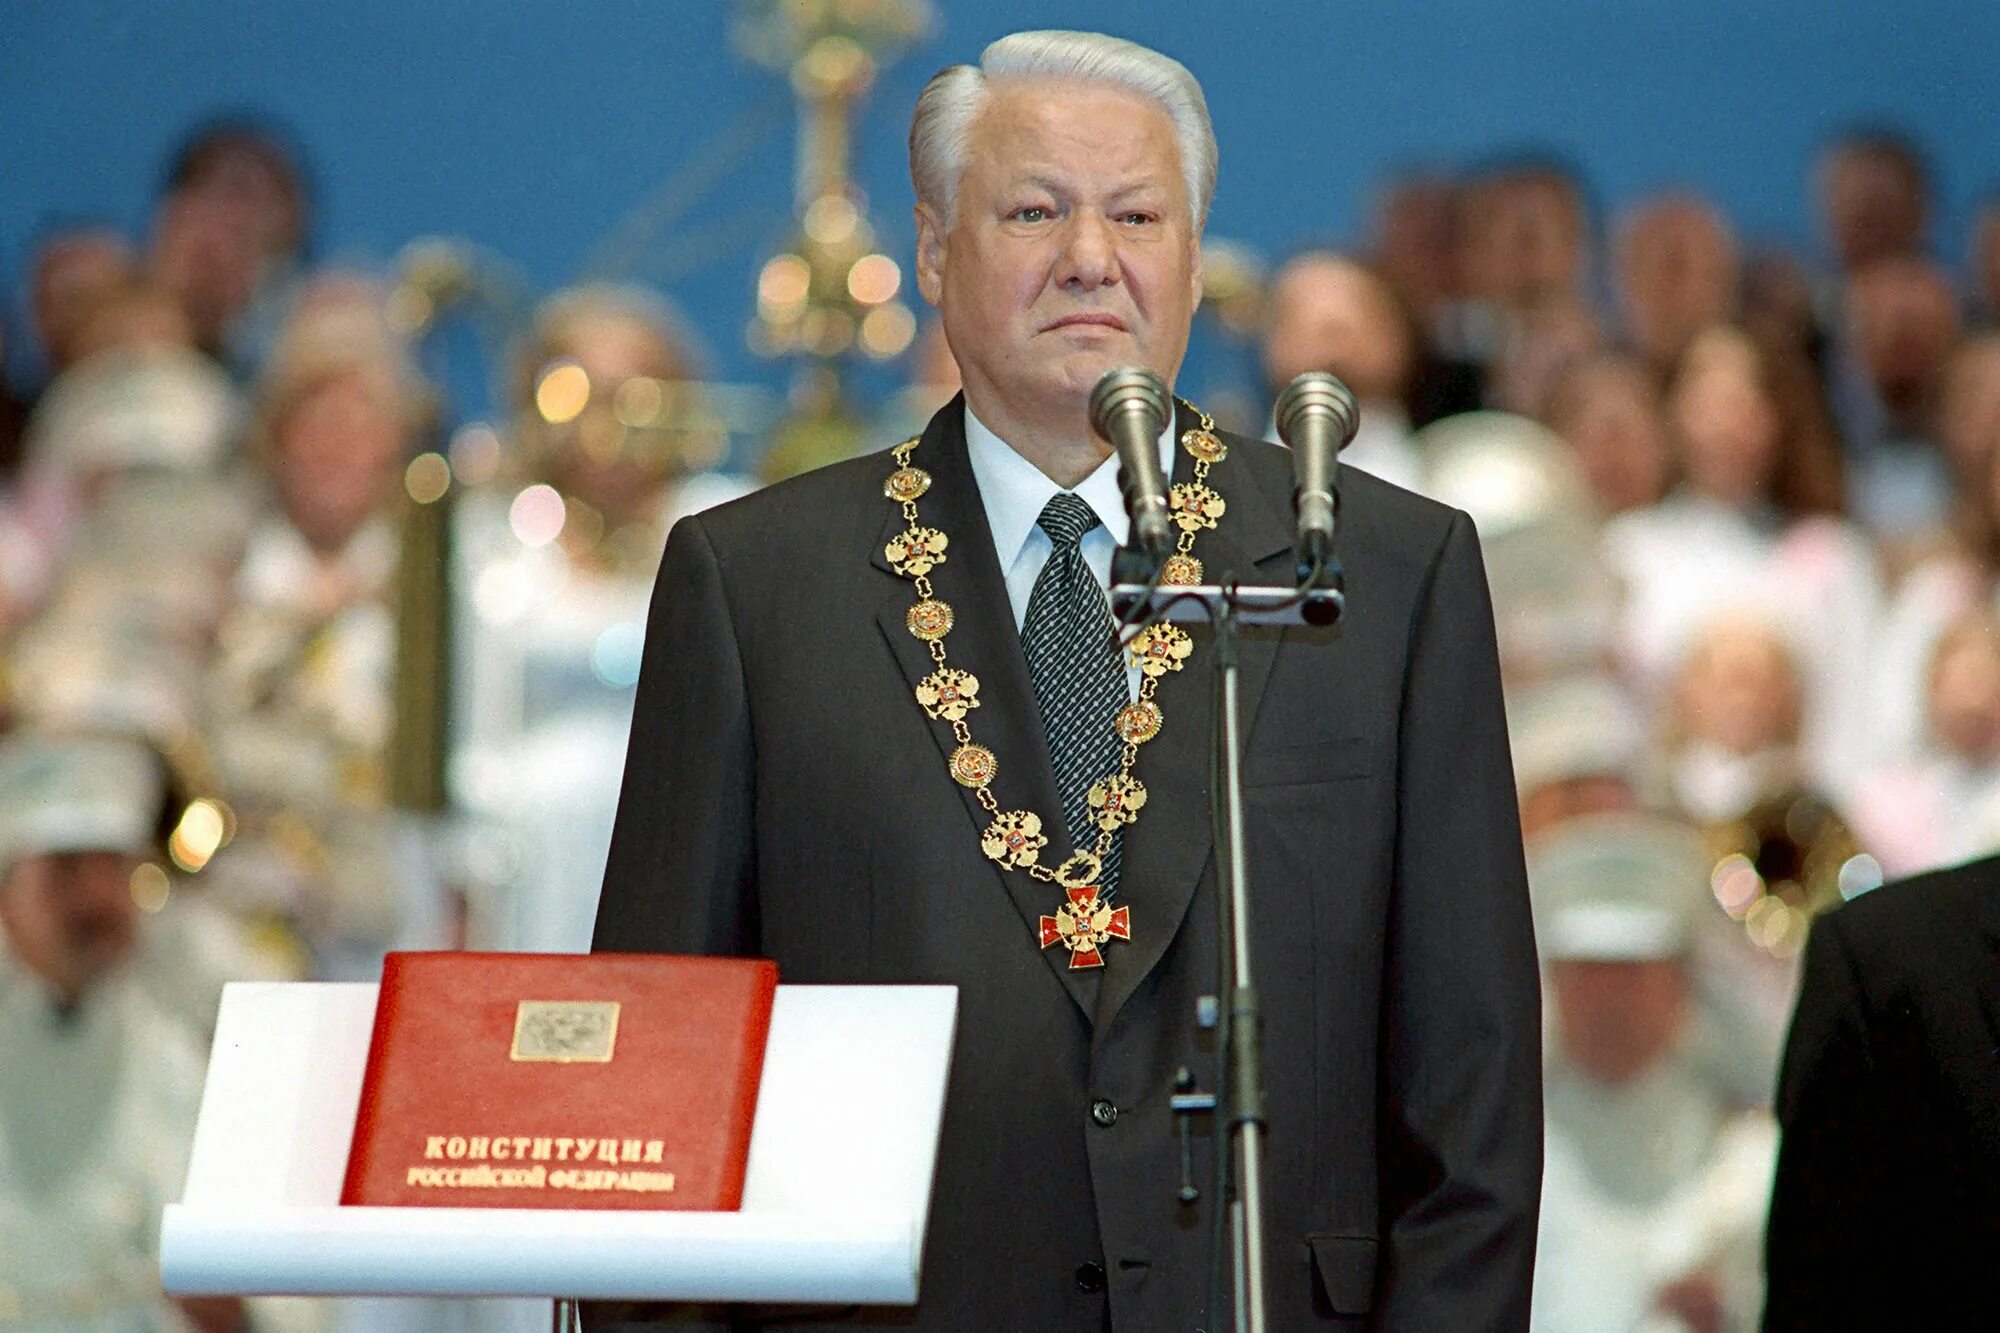 Инаугурация Ельцина 1996. Избрание президентом россии б н ельцина